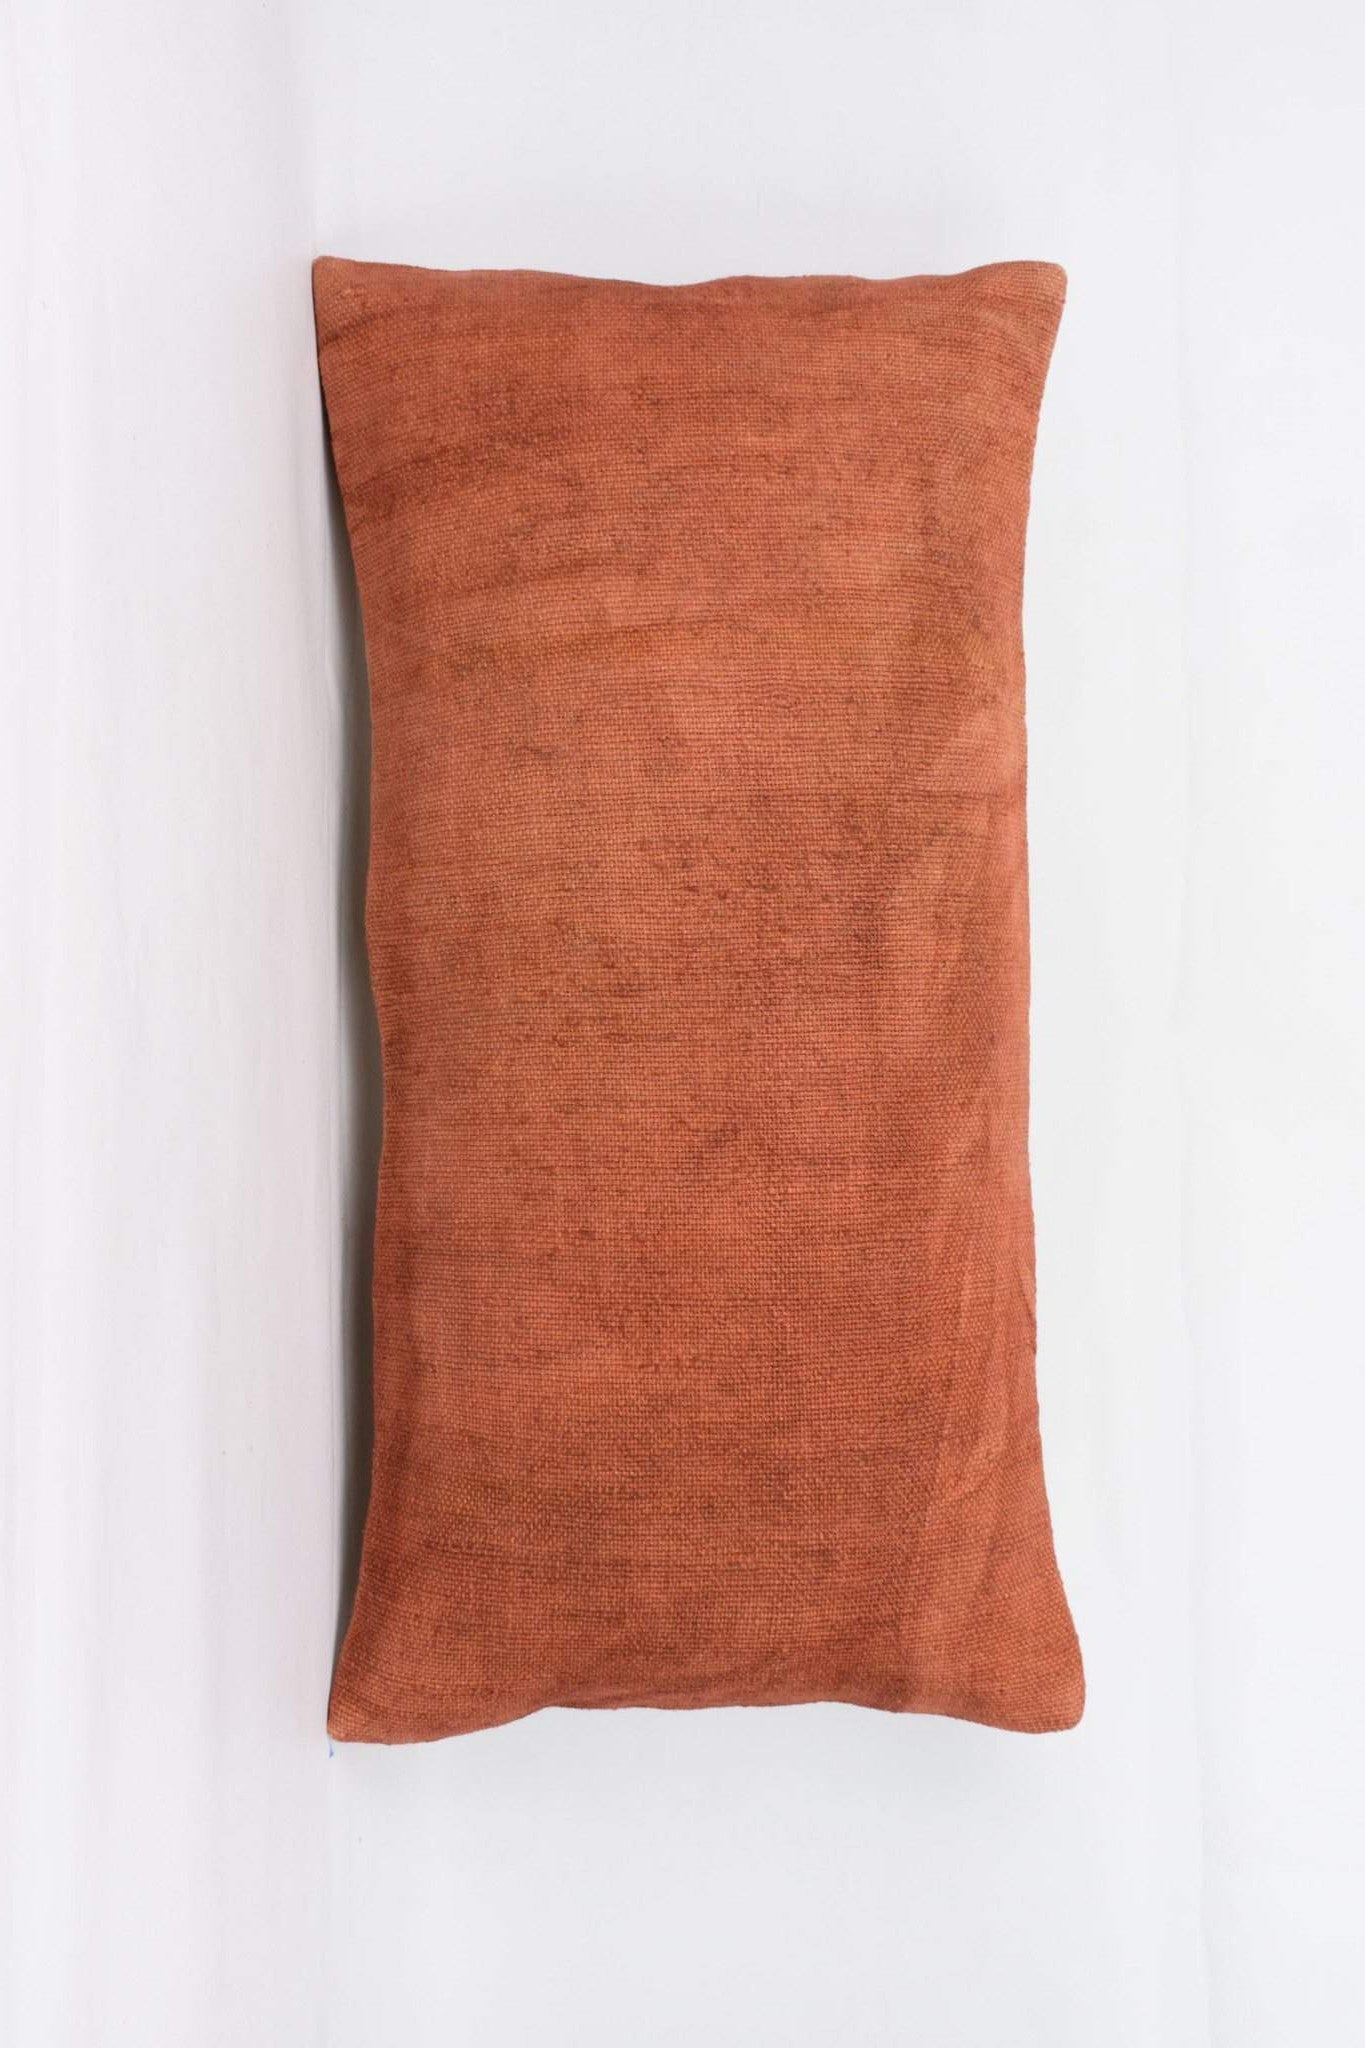 Plain Brown Kilim Pillow Cover 12x24 4188 - kilimpillowstore
 - 1